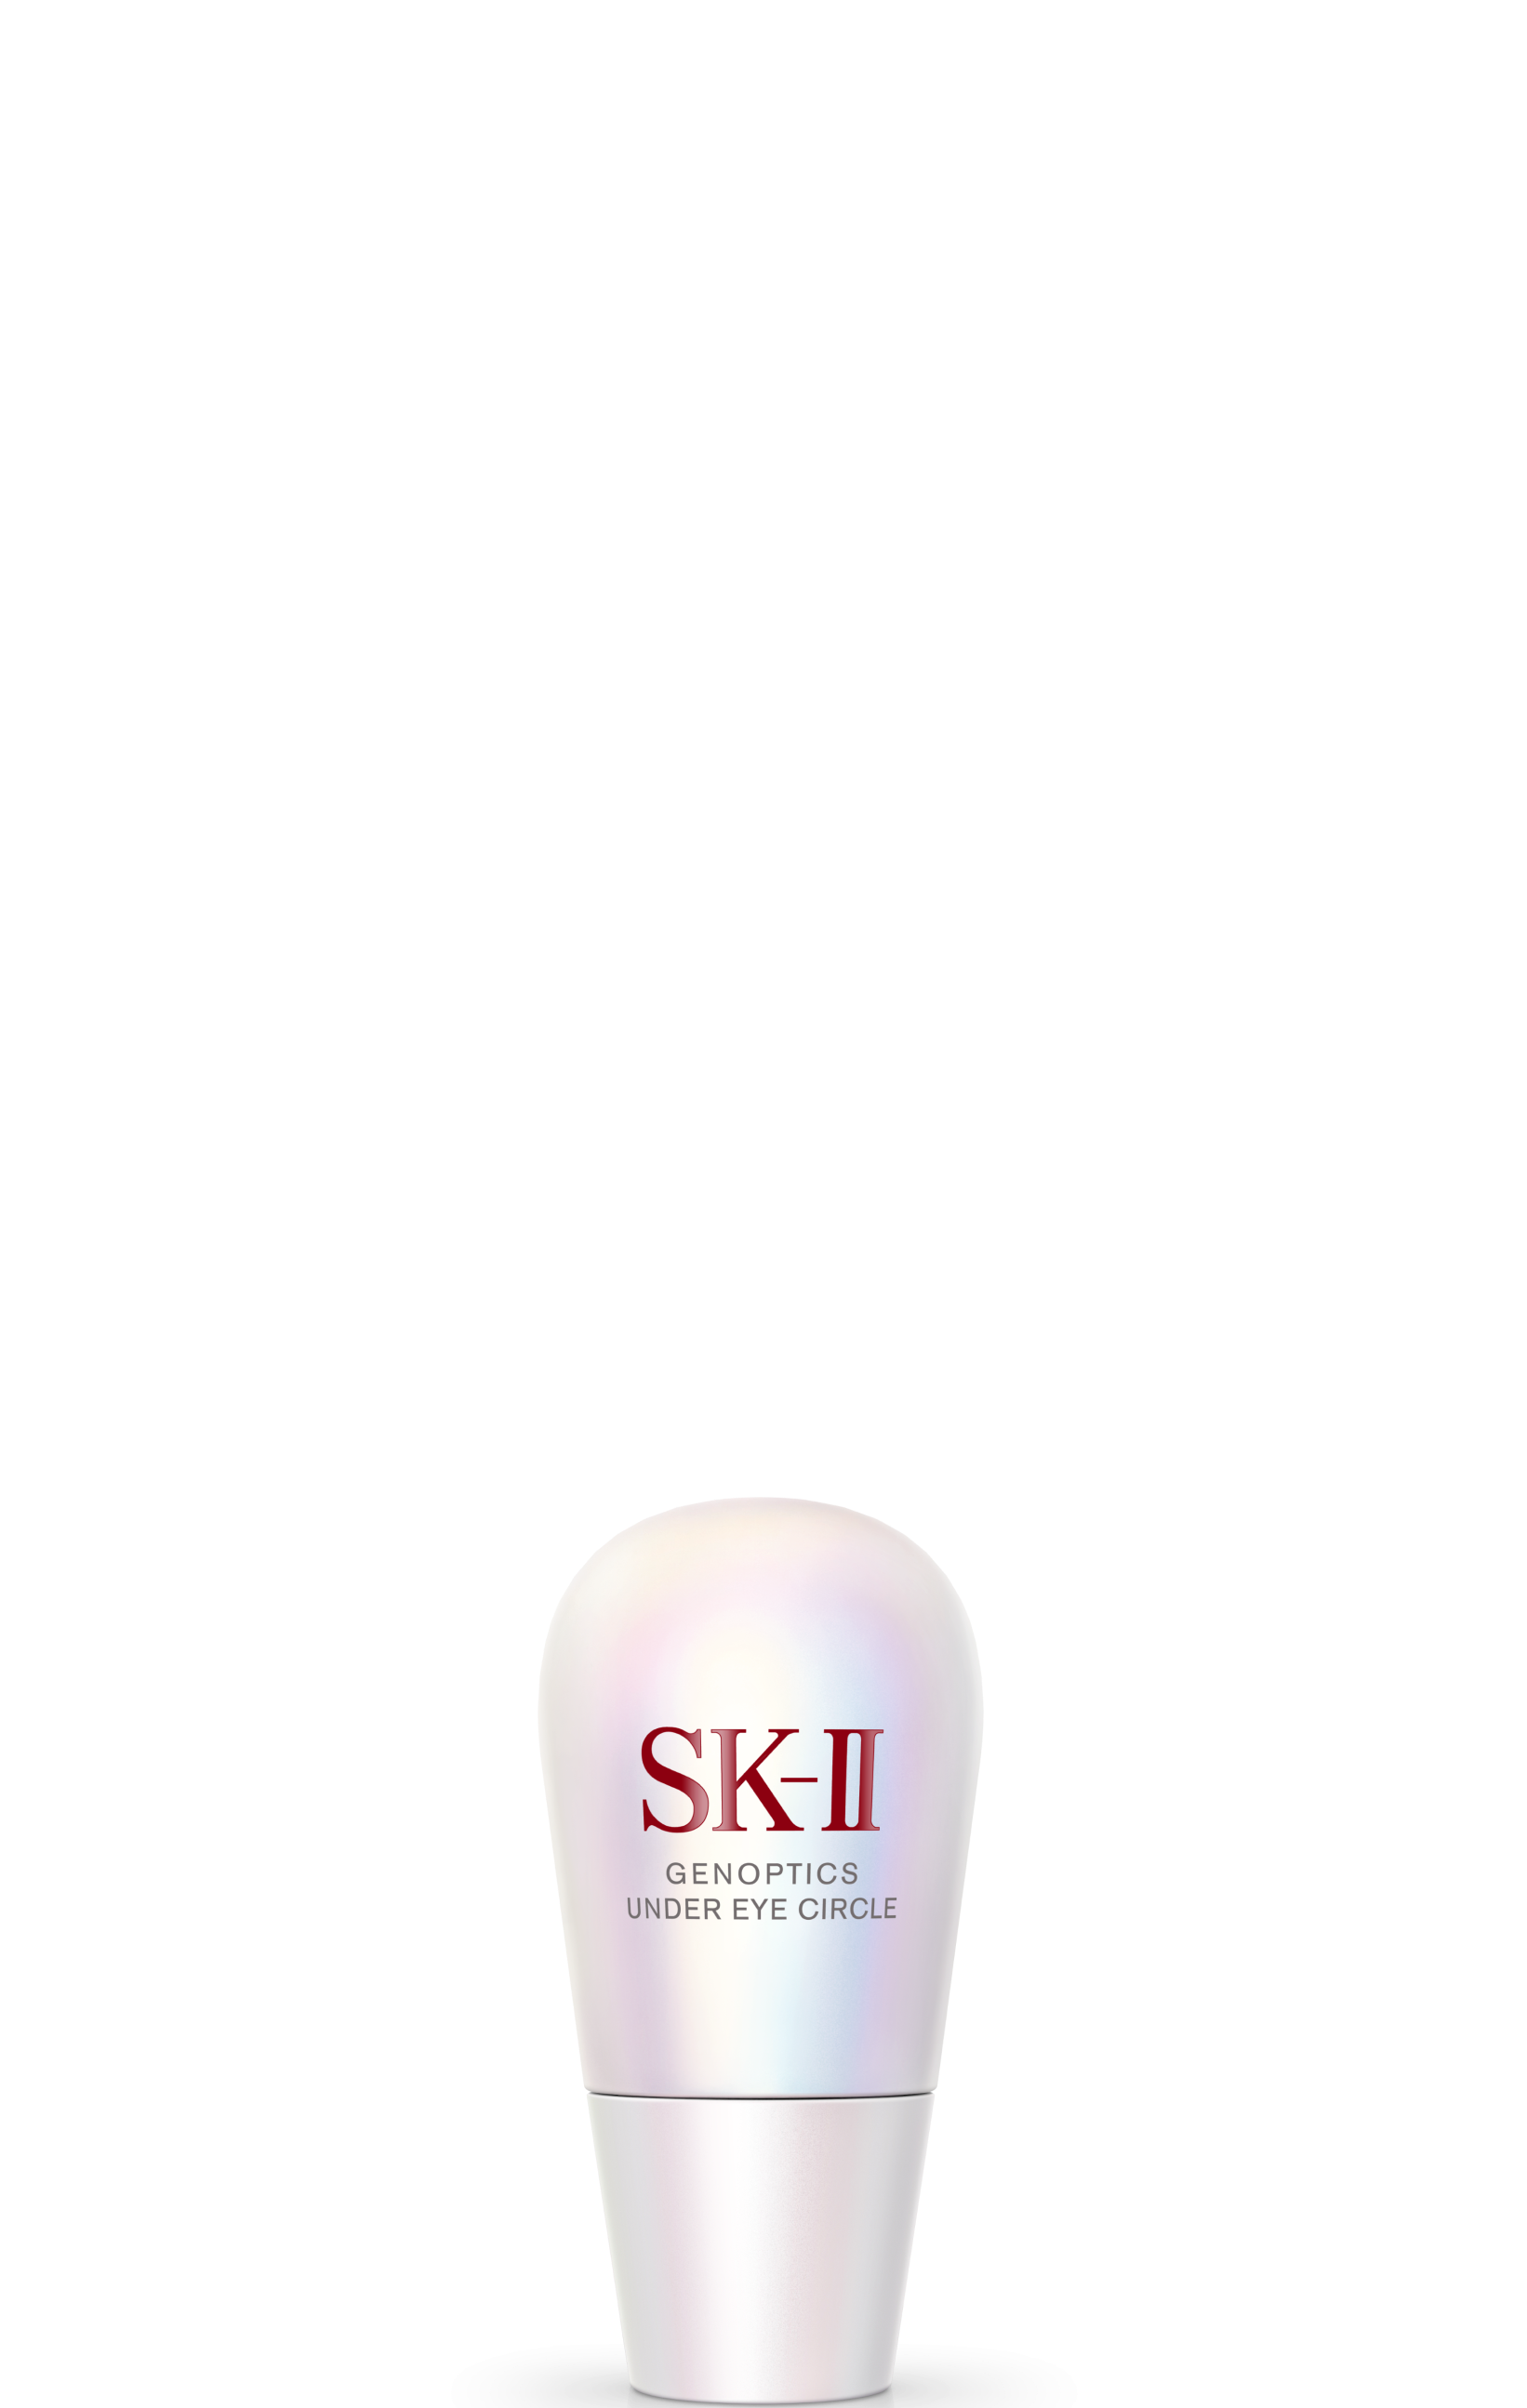 SK-IIエスケーツージェノプティクス  アンダーアイサークル（目元用美容液) 美容液 アウトレット通販売